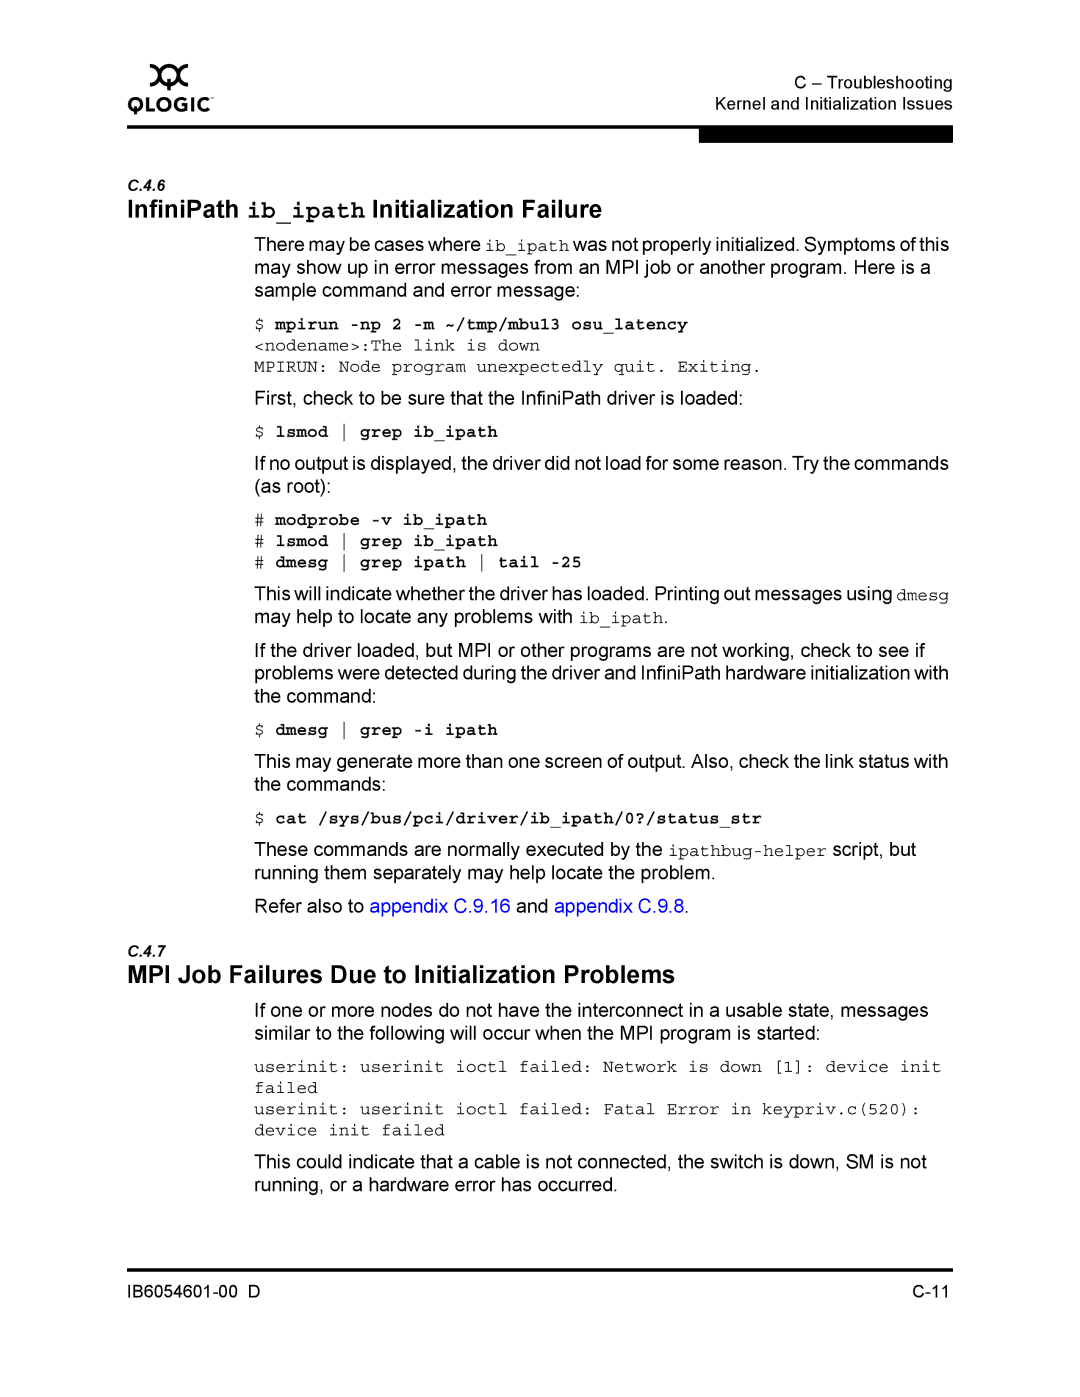 Q-Logic IB6054601-00 D manual InfiniPath ibipath Initialization Failure, MPI Job Failures Due to Initialization Problems 